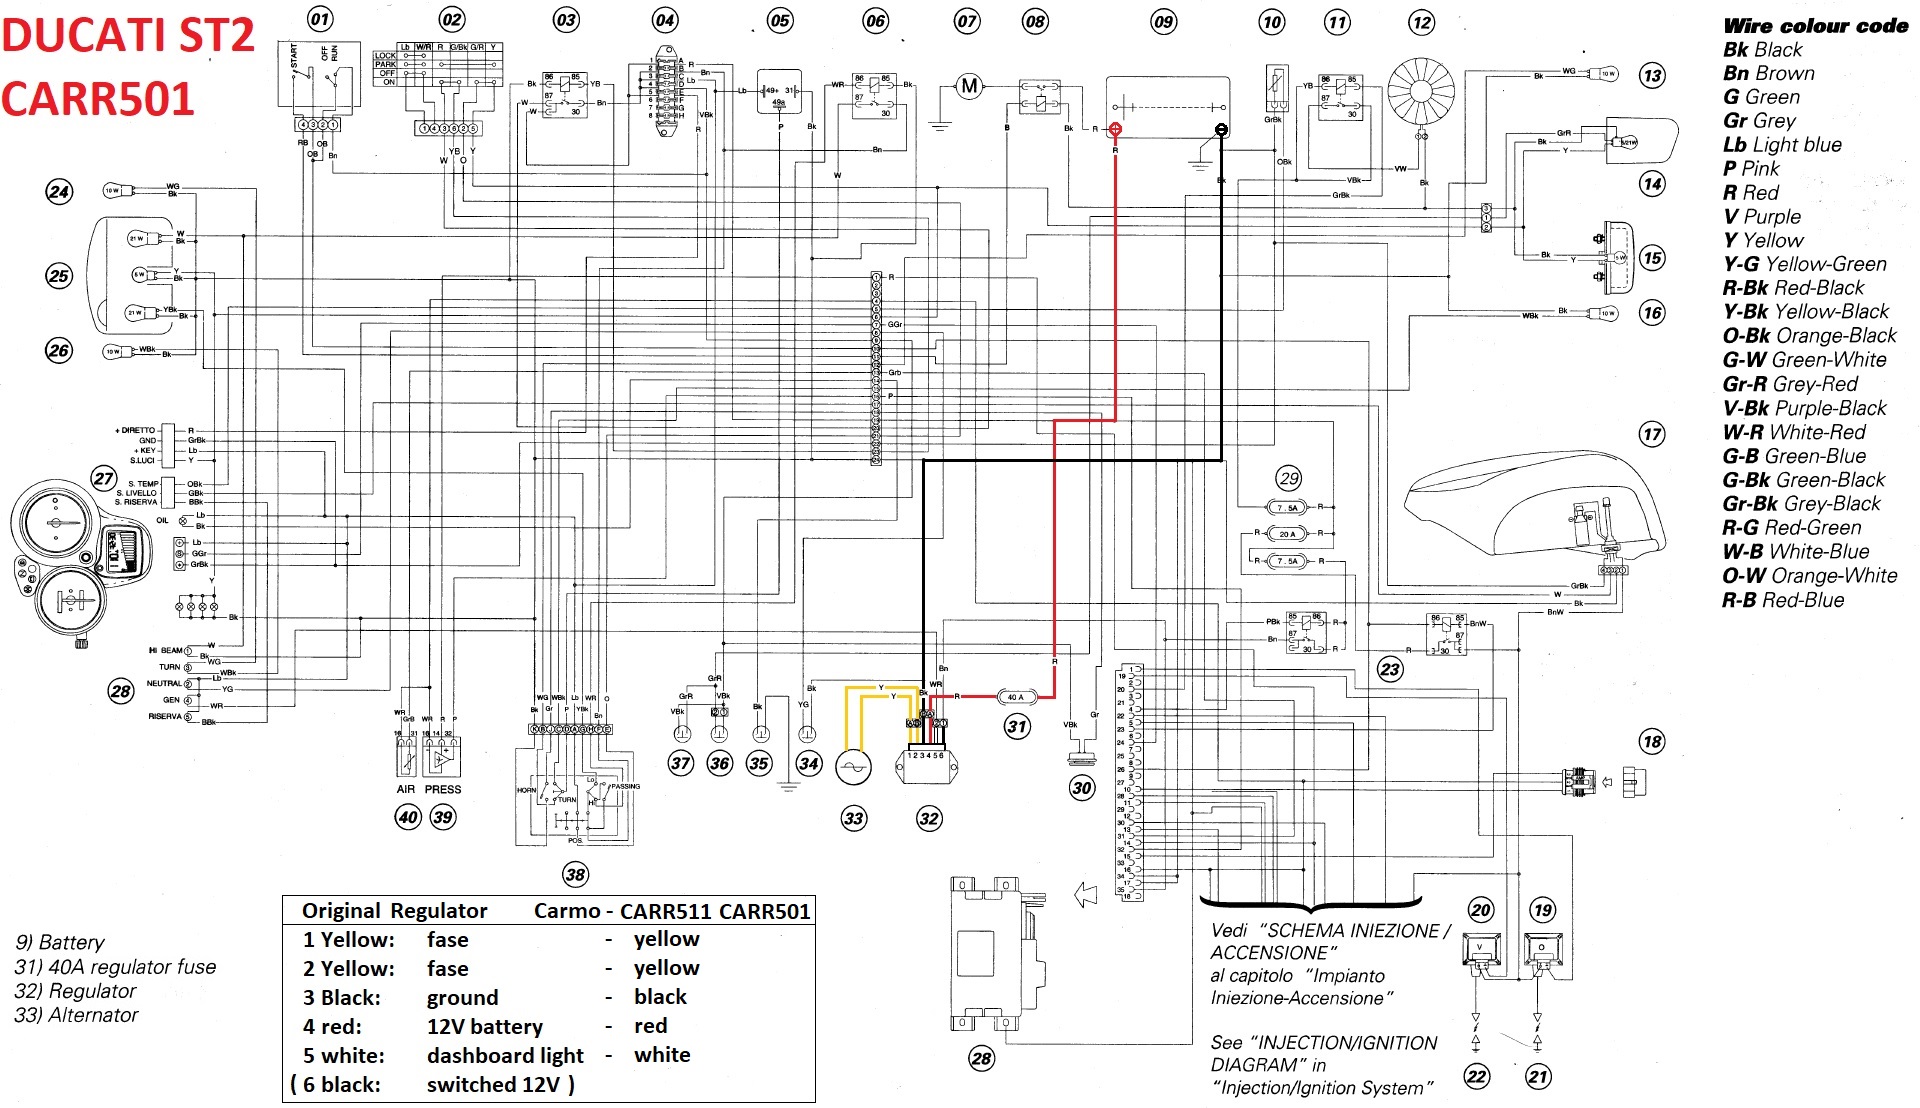 Verucci Wiring Diagram - Wiring Diagrams